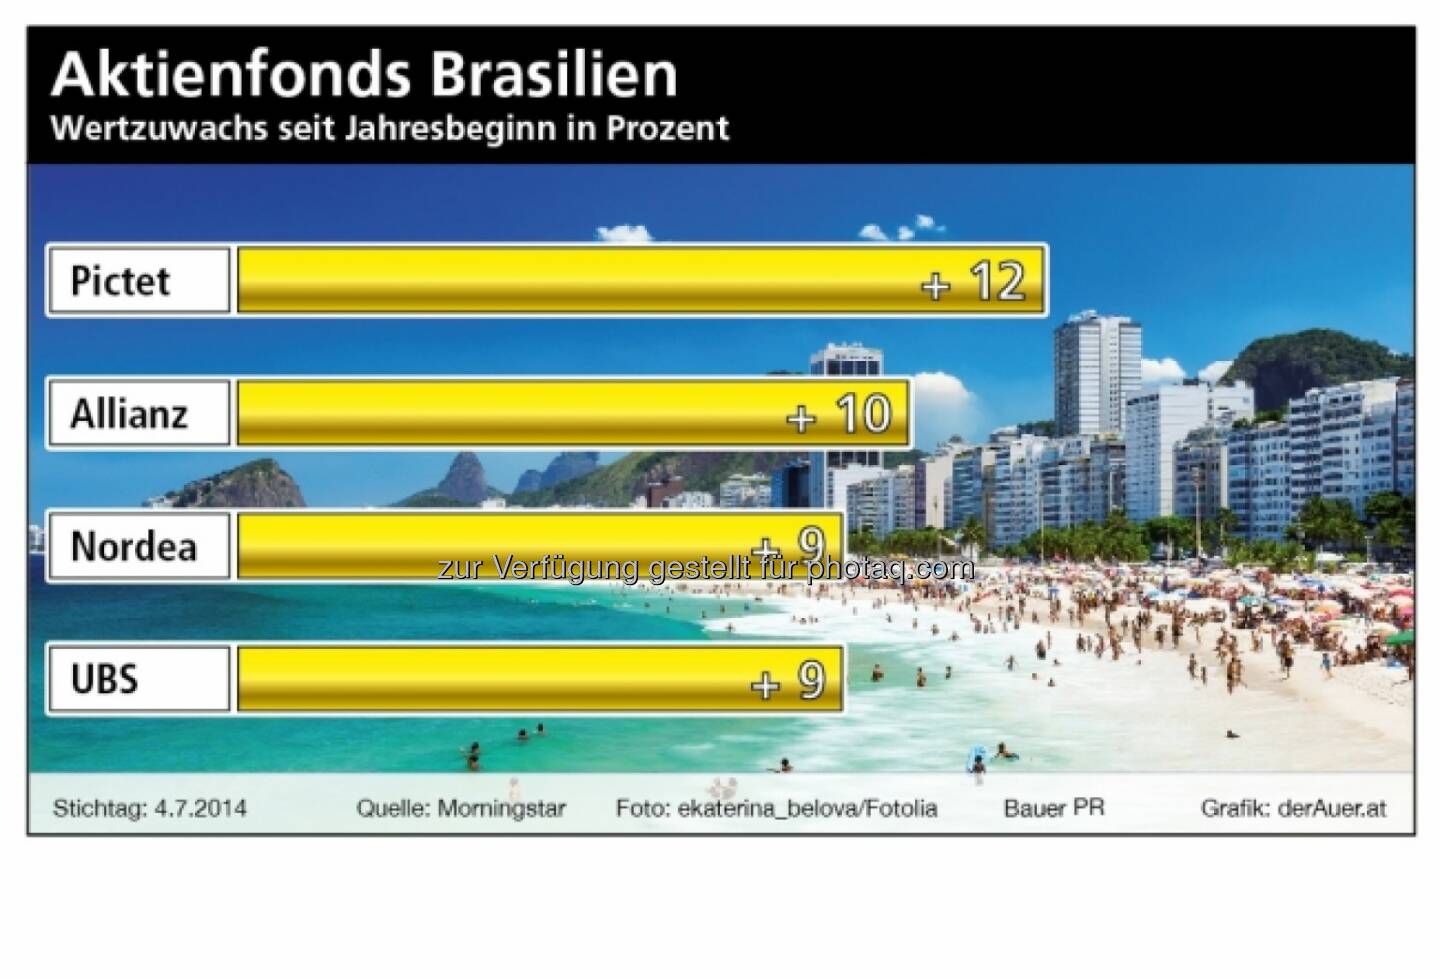 Aktienfonds Brasilien: Pictet, Allianz, Nordea, UBS (c) derAuer Grafik Buch Web (28.12.2013)